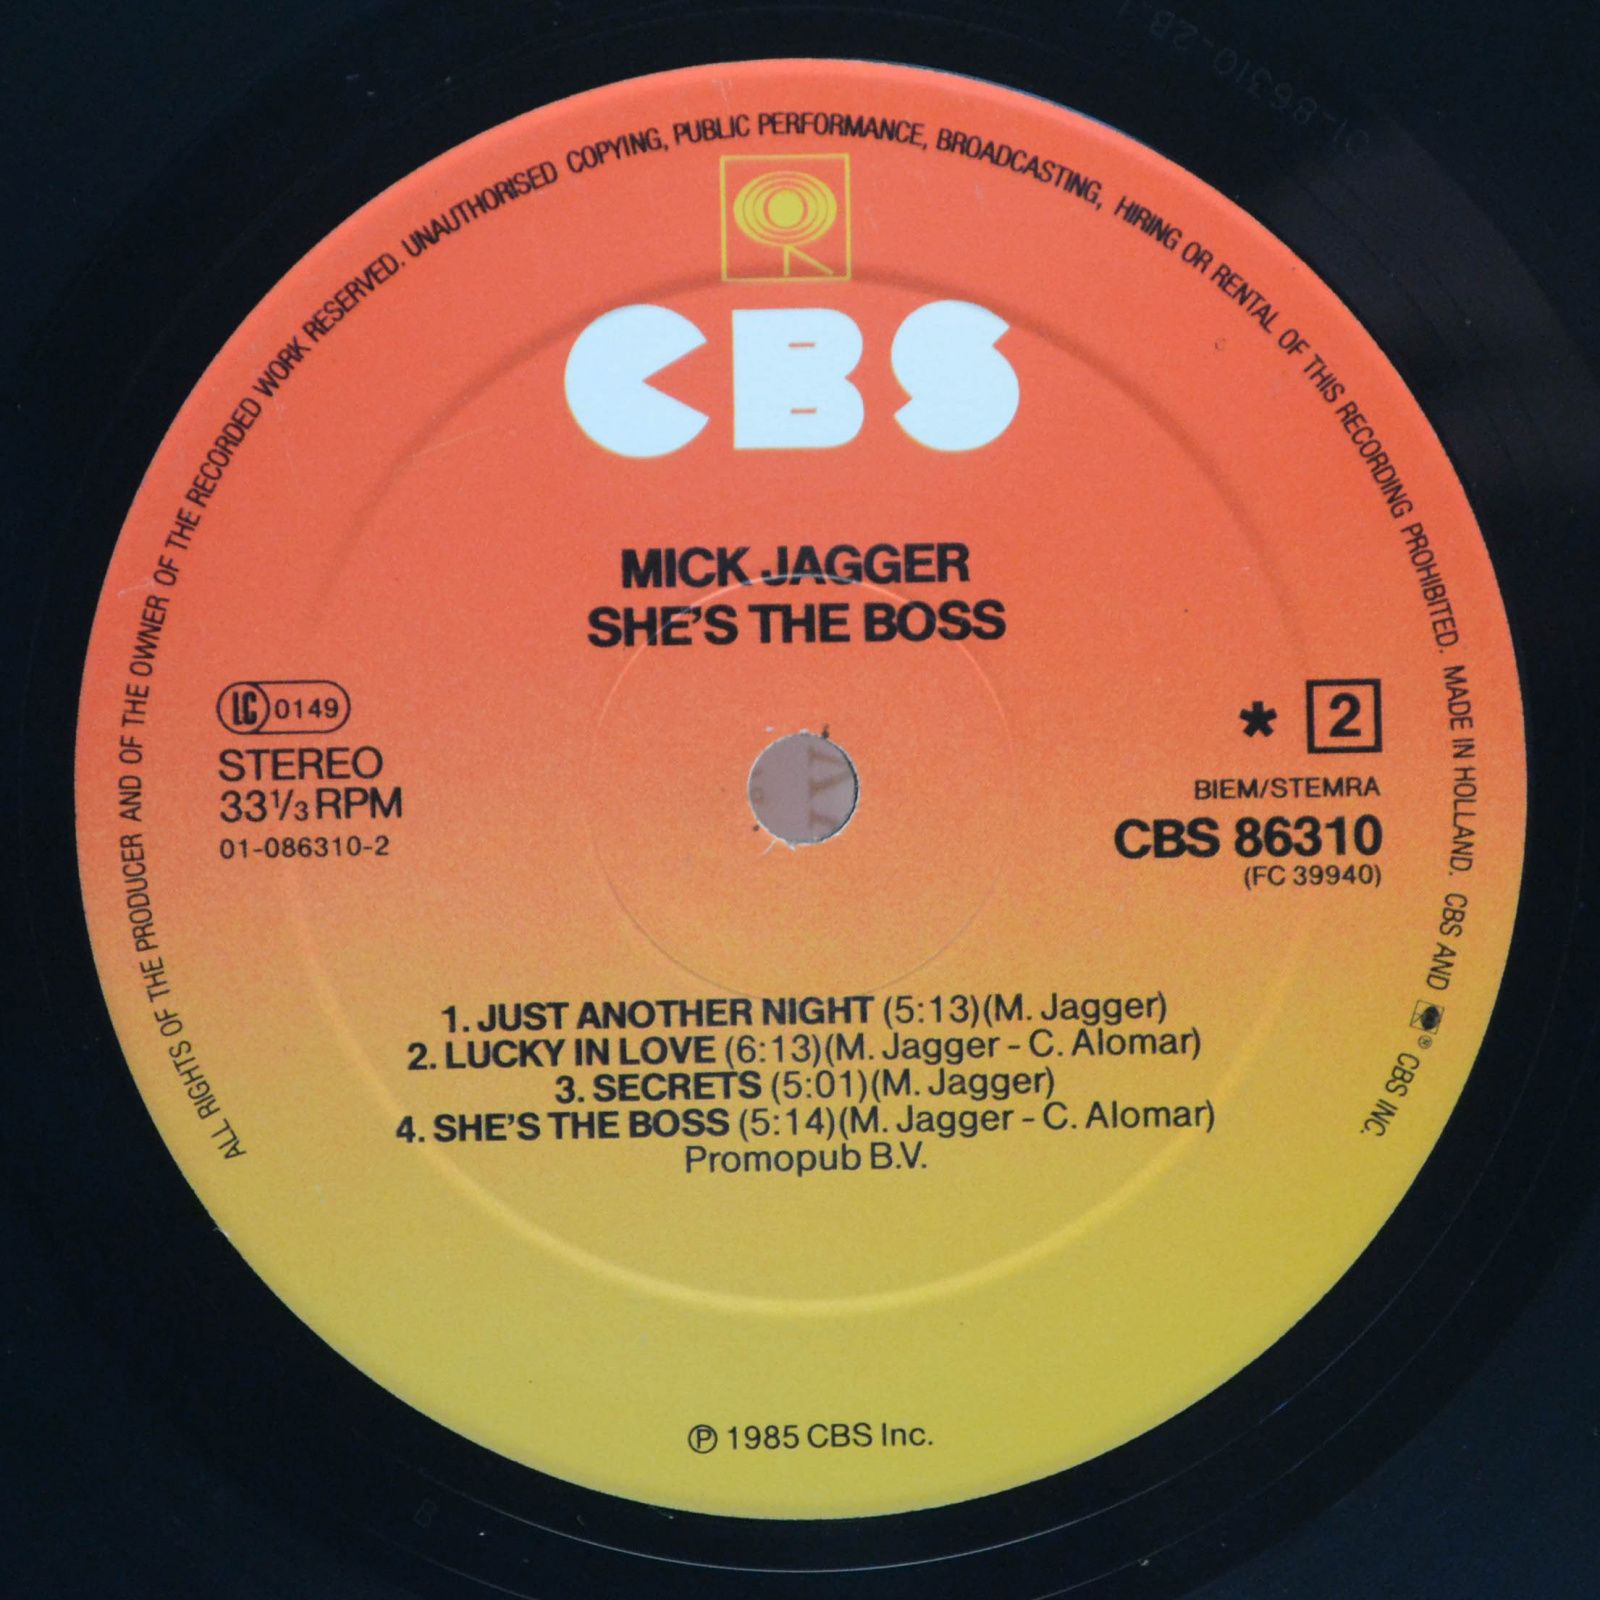 Mick Jagger — She's The Boss, 1985